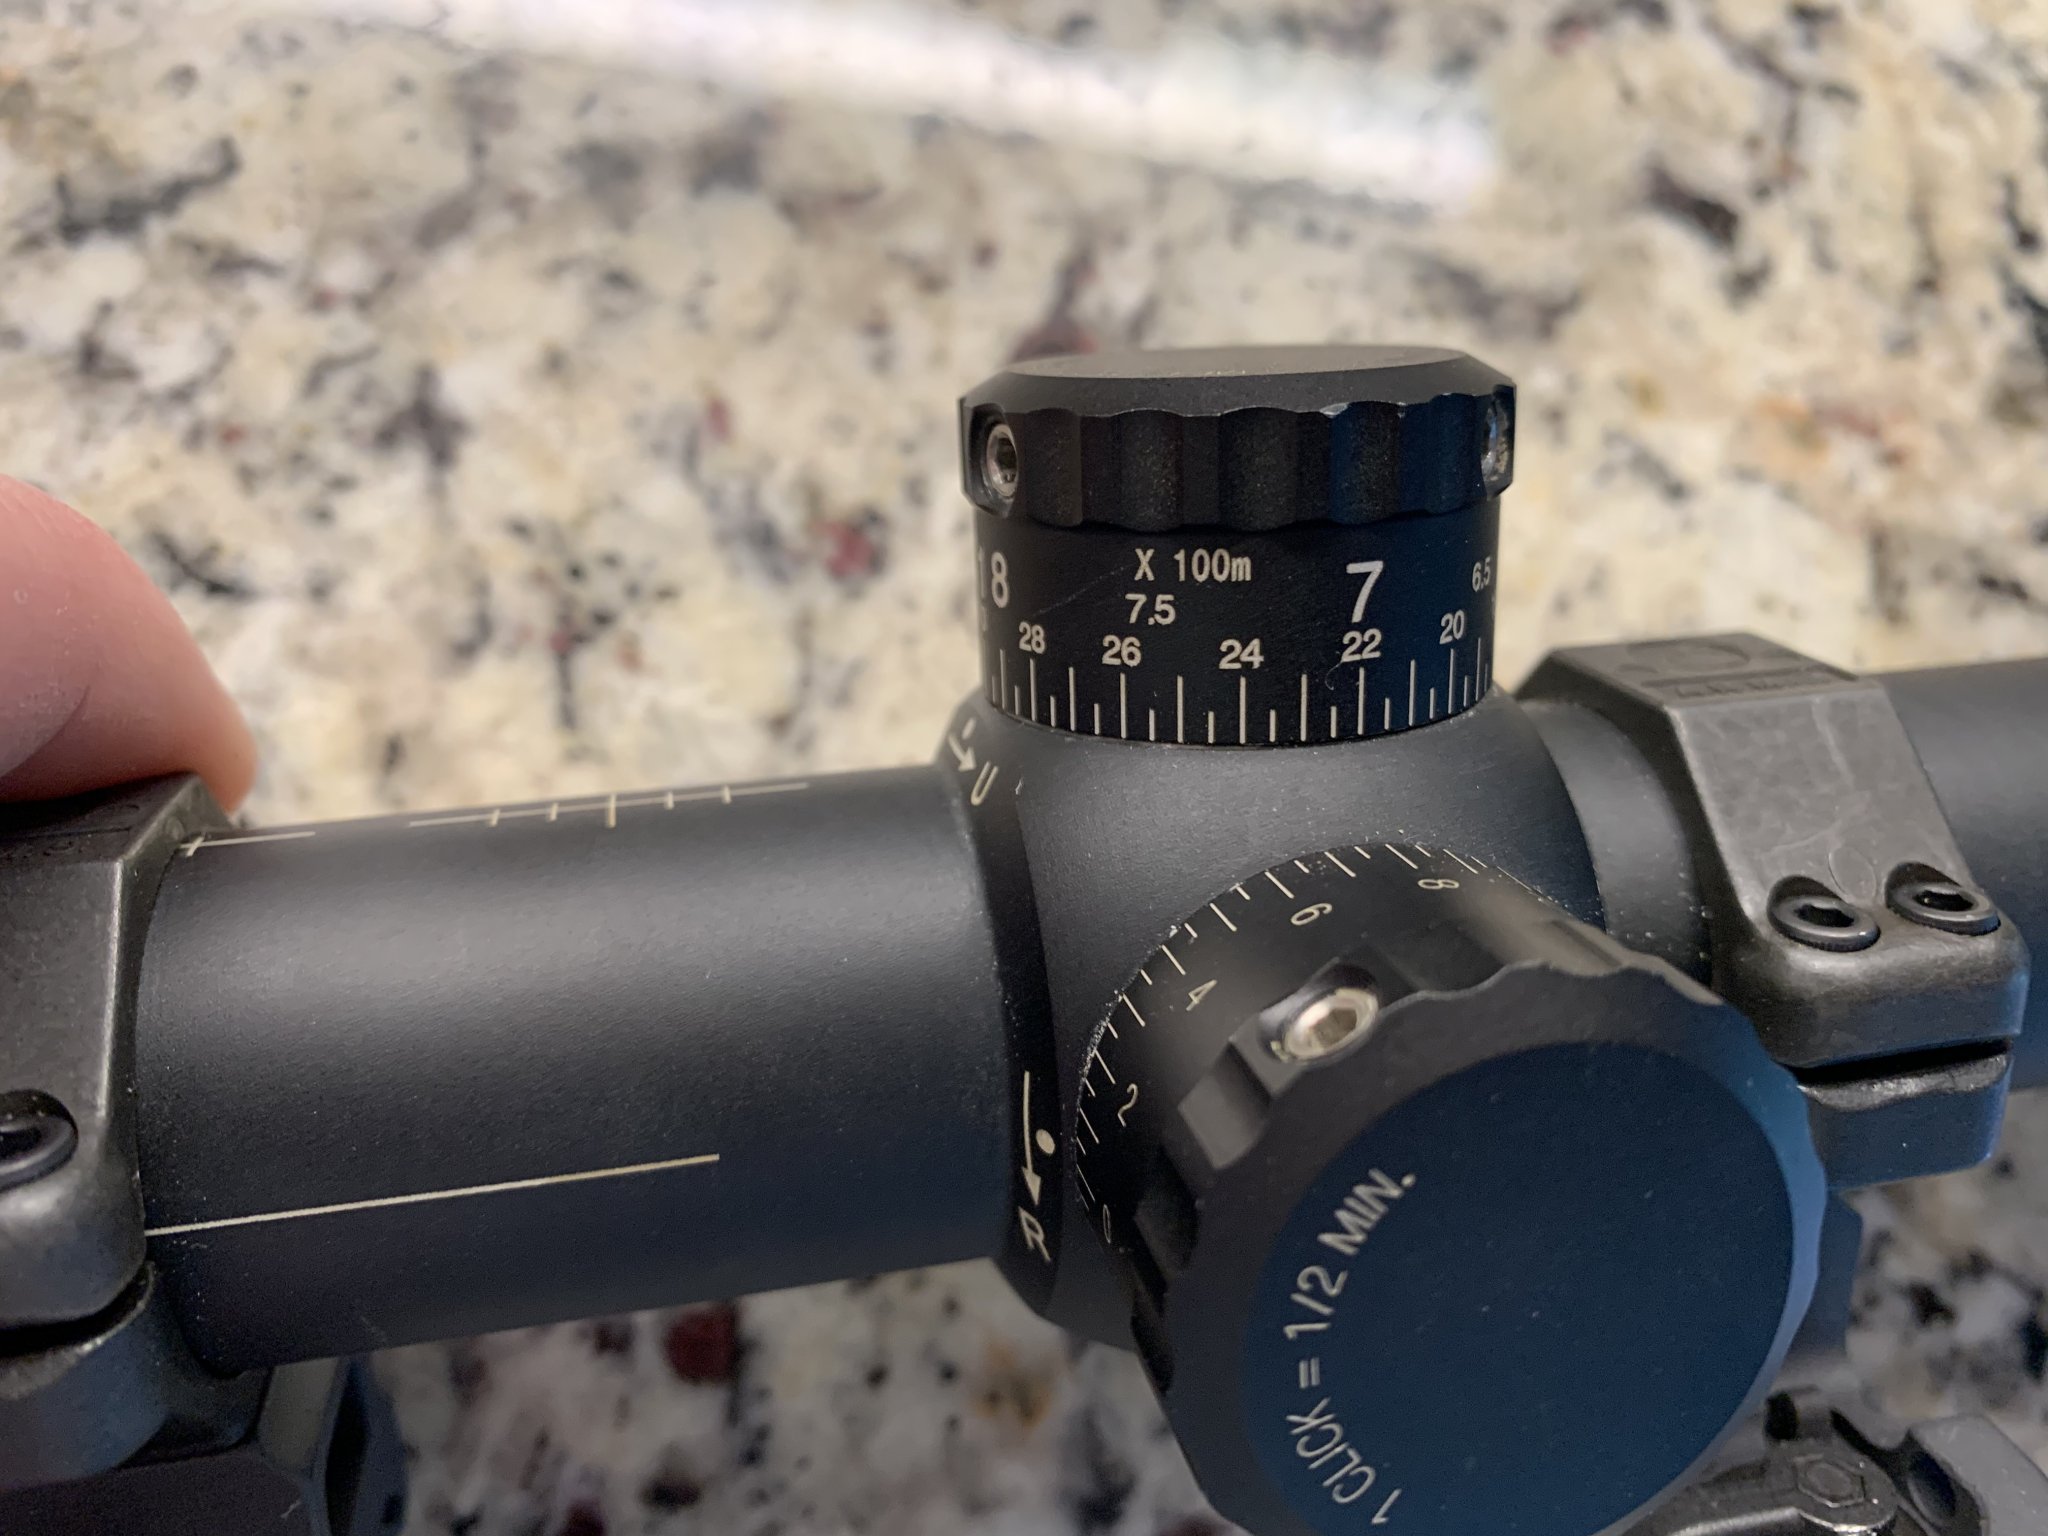 Optics - Closed: Leupold TS30-A2 Mark 4 2.5-8x36mm TMR Illuminated ...